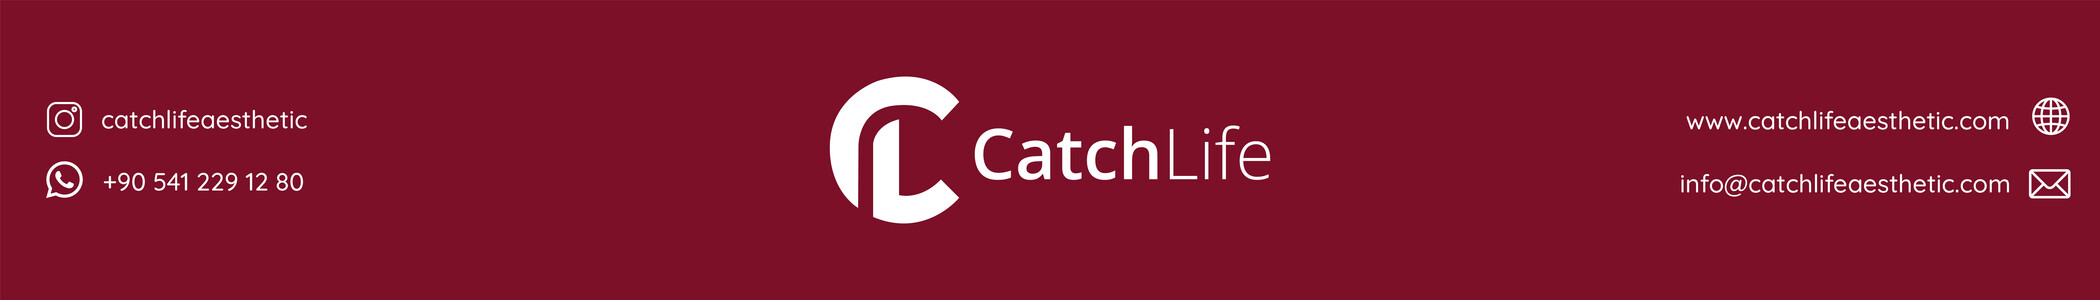 CatchLife - Cover Photo